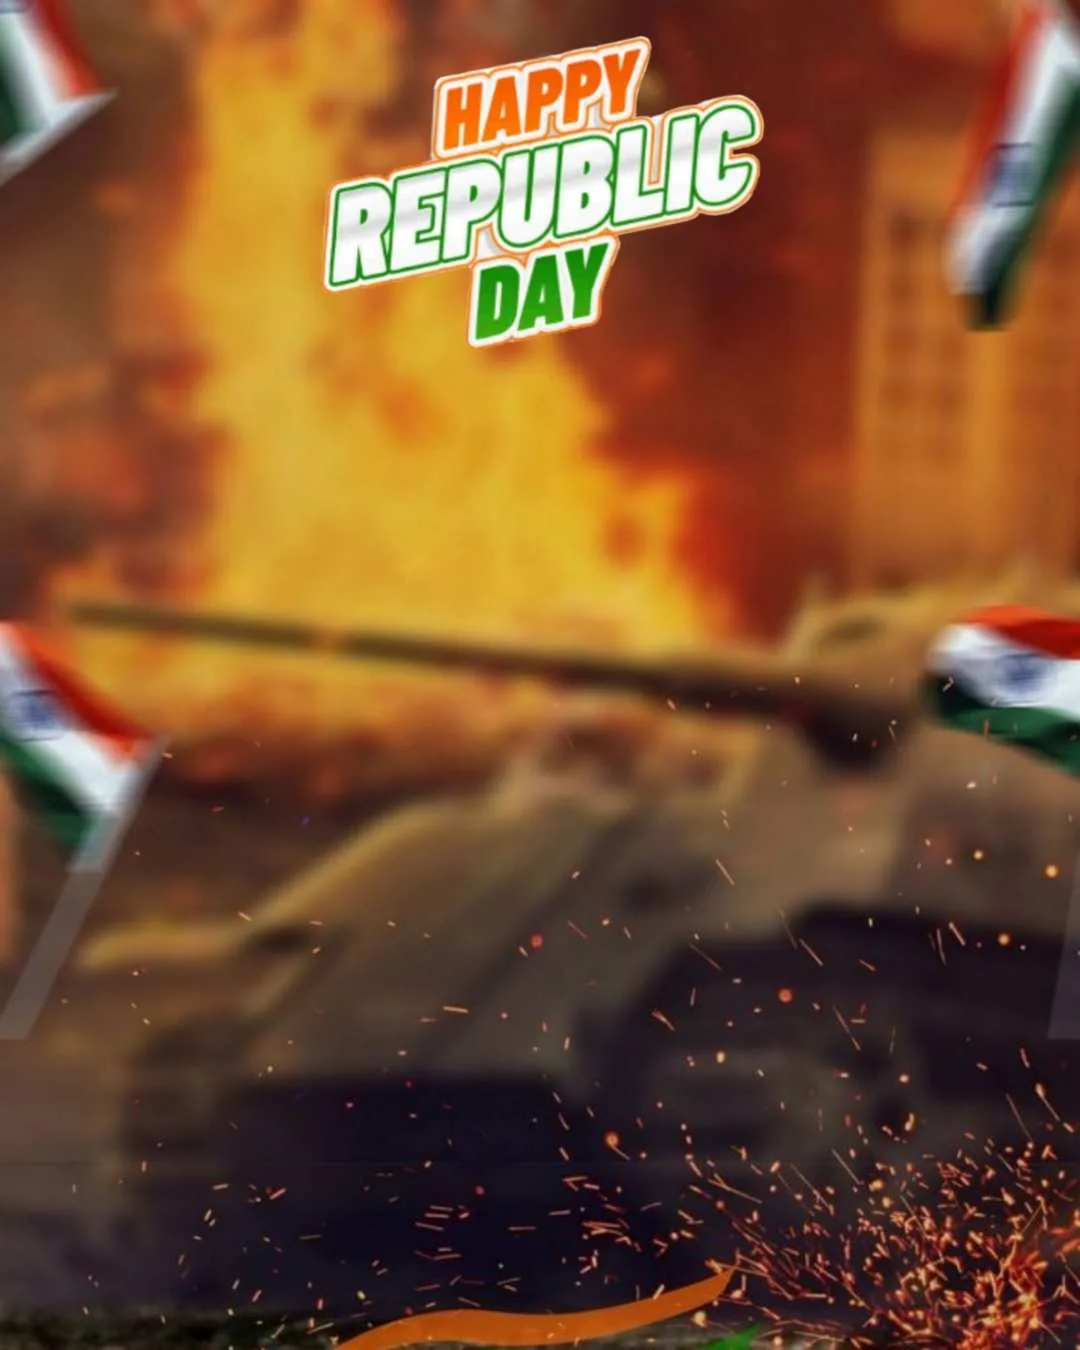 Happy Republic day photo editing background